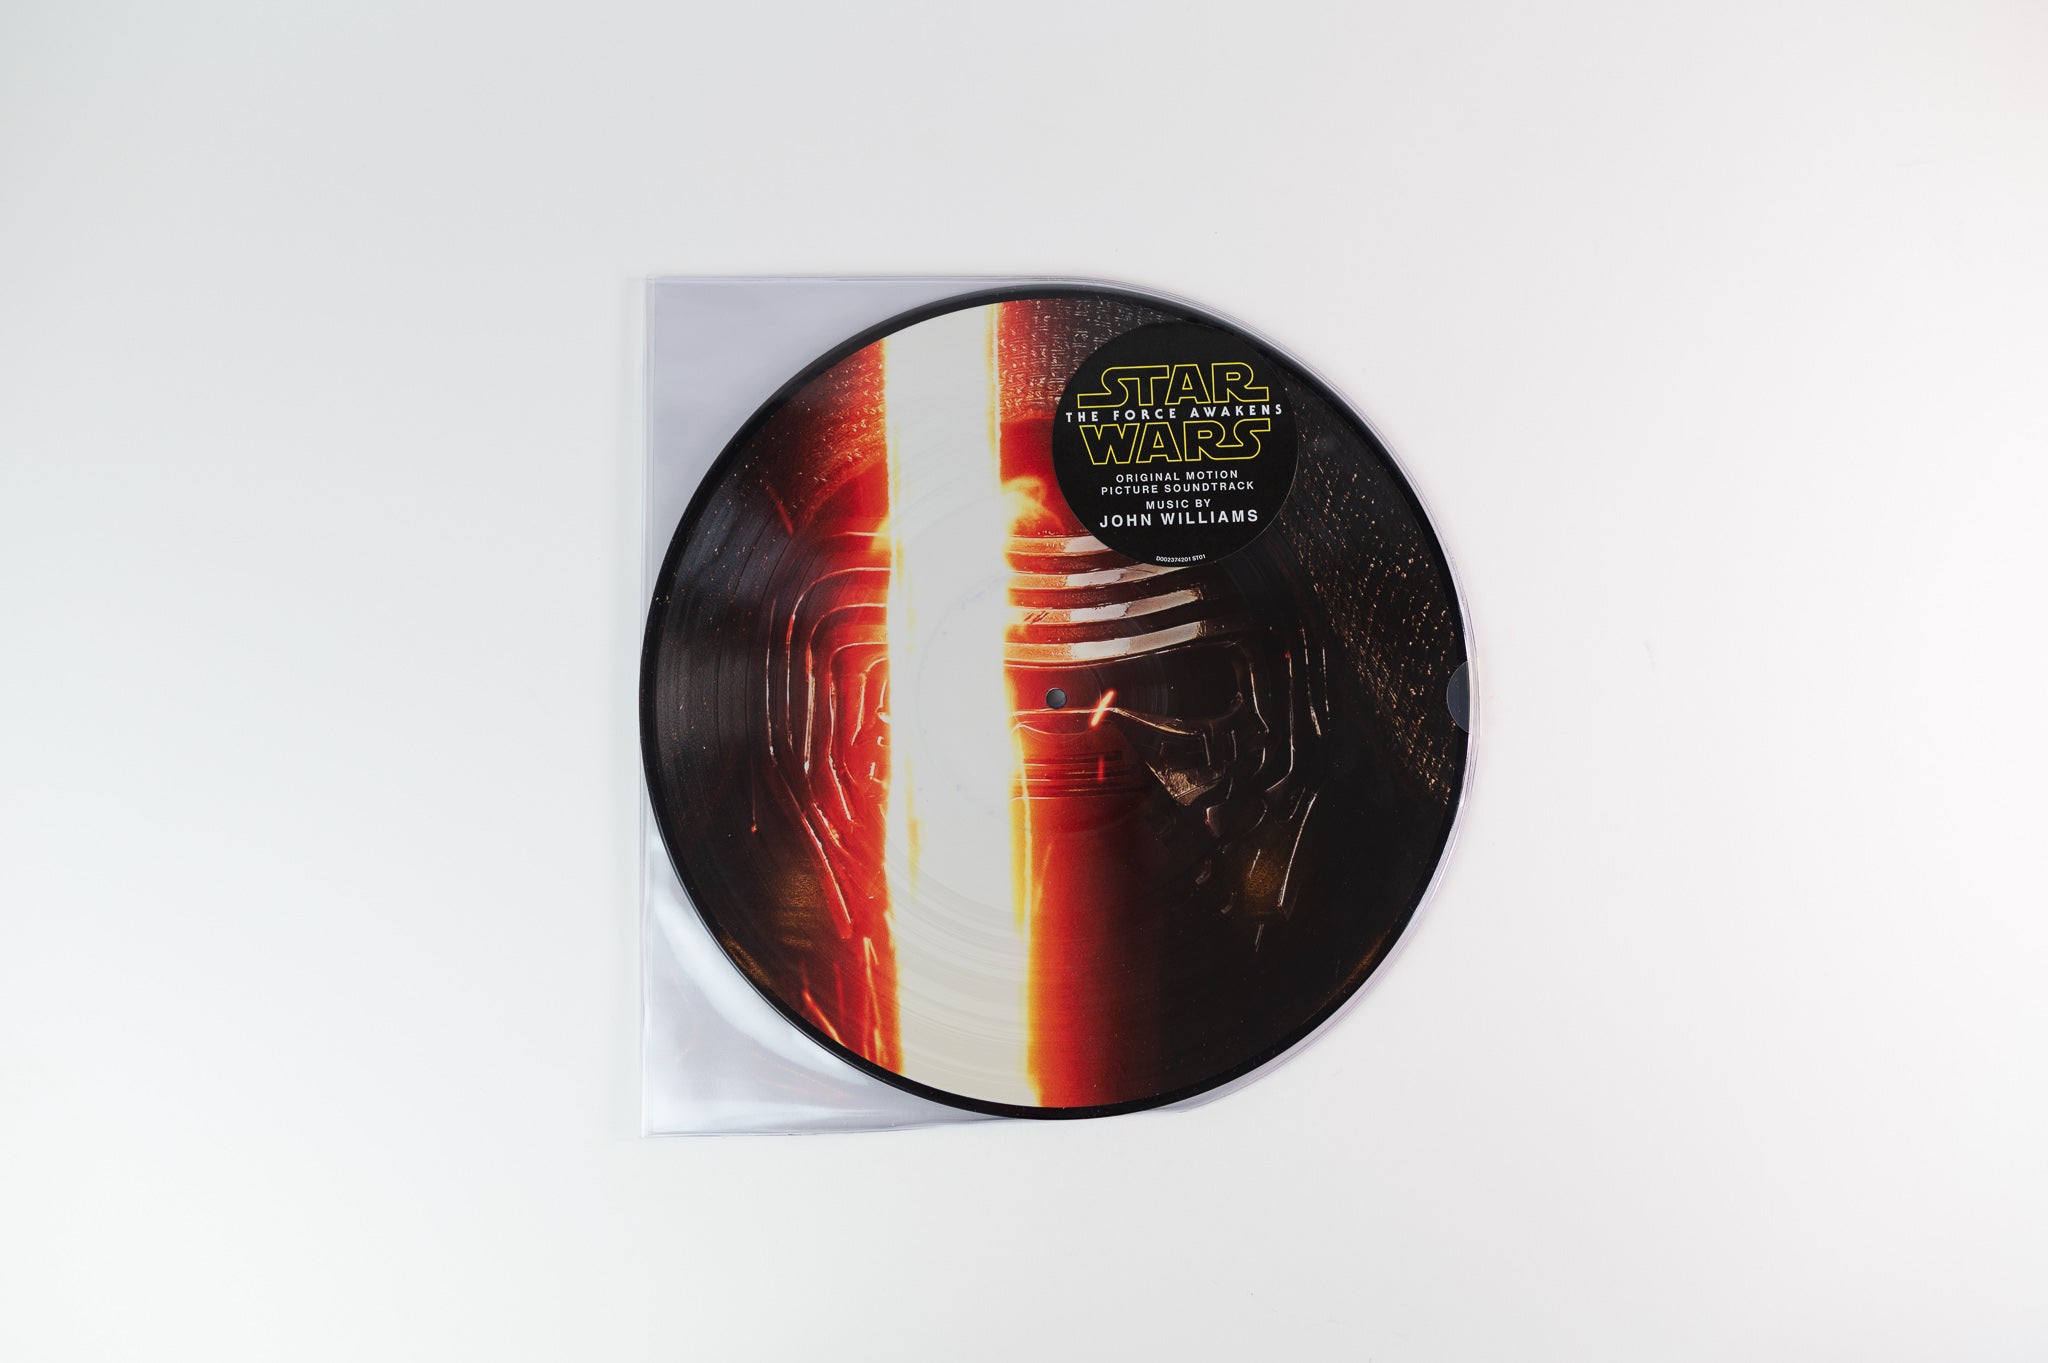 John Williams - Star Wars: The Force Awakens (Original Motion Picture Soundtrack) on Walt Disney Records